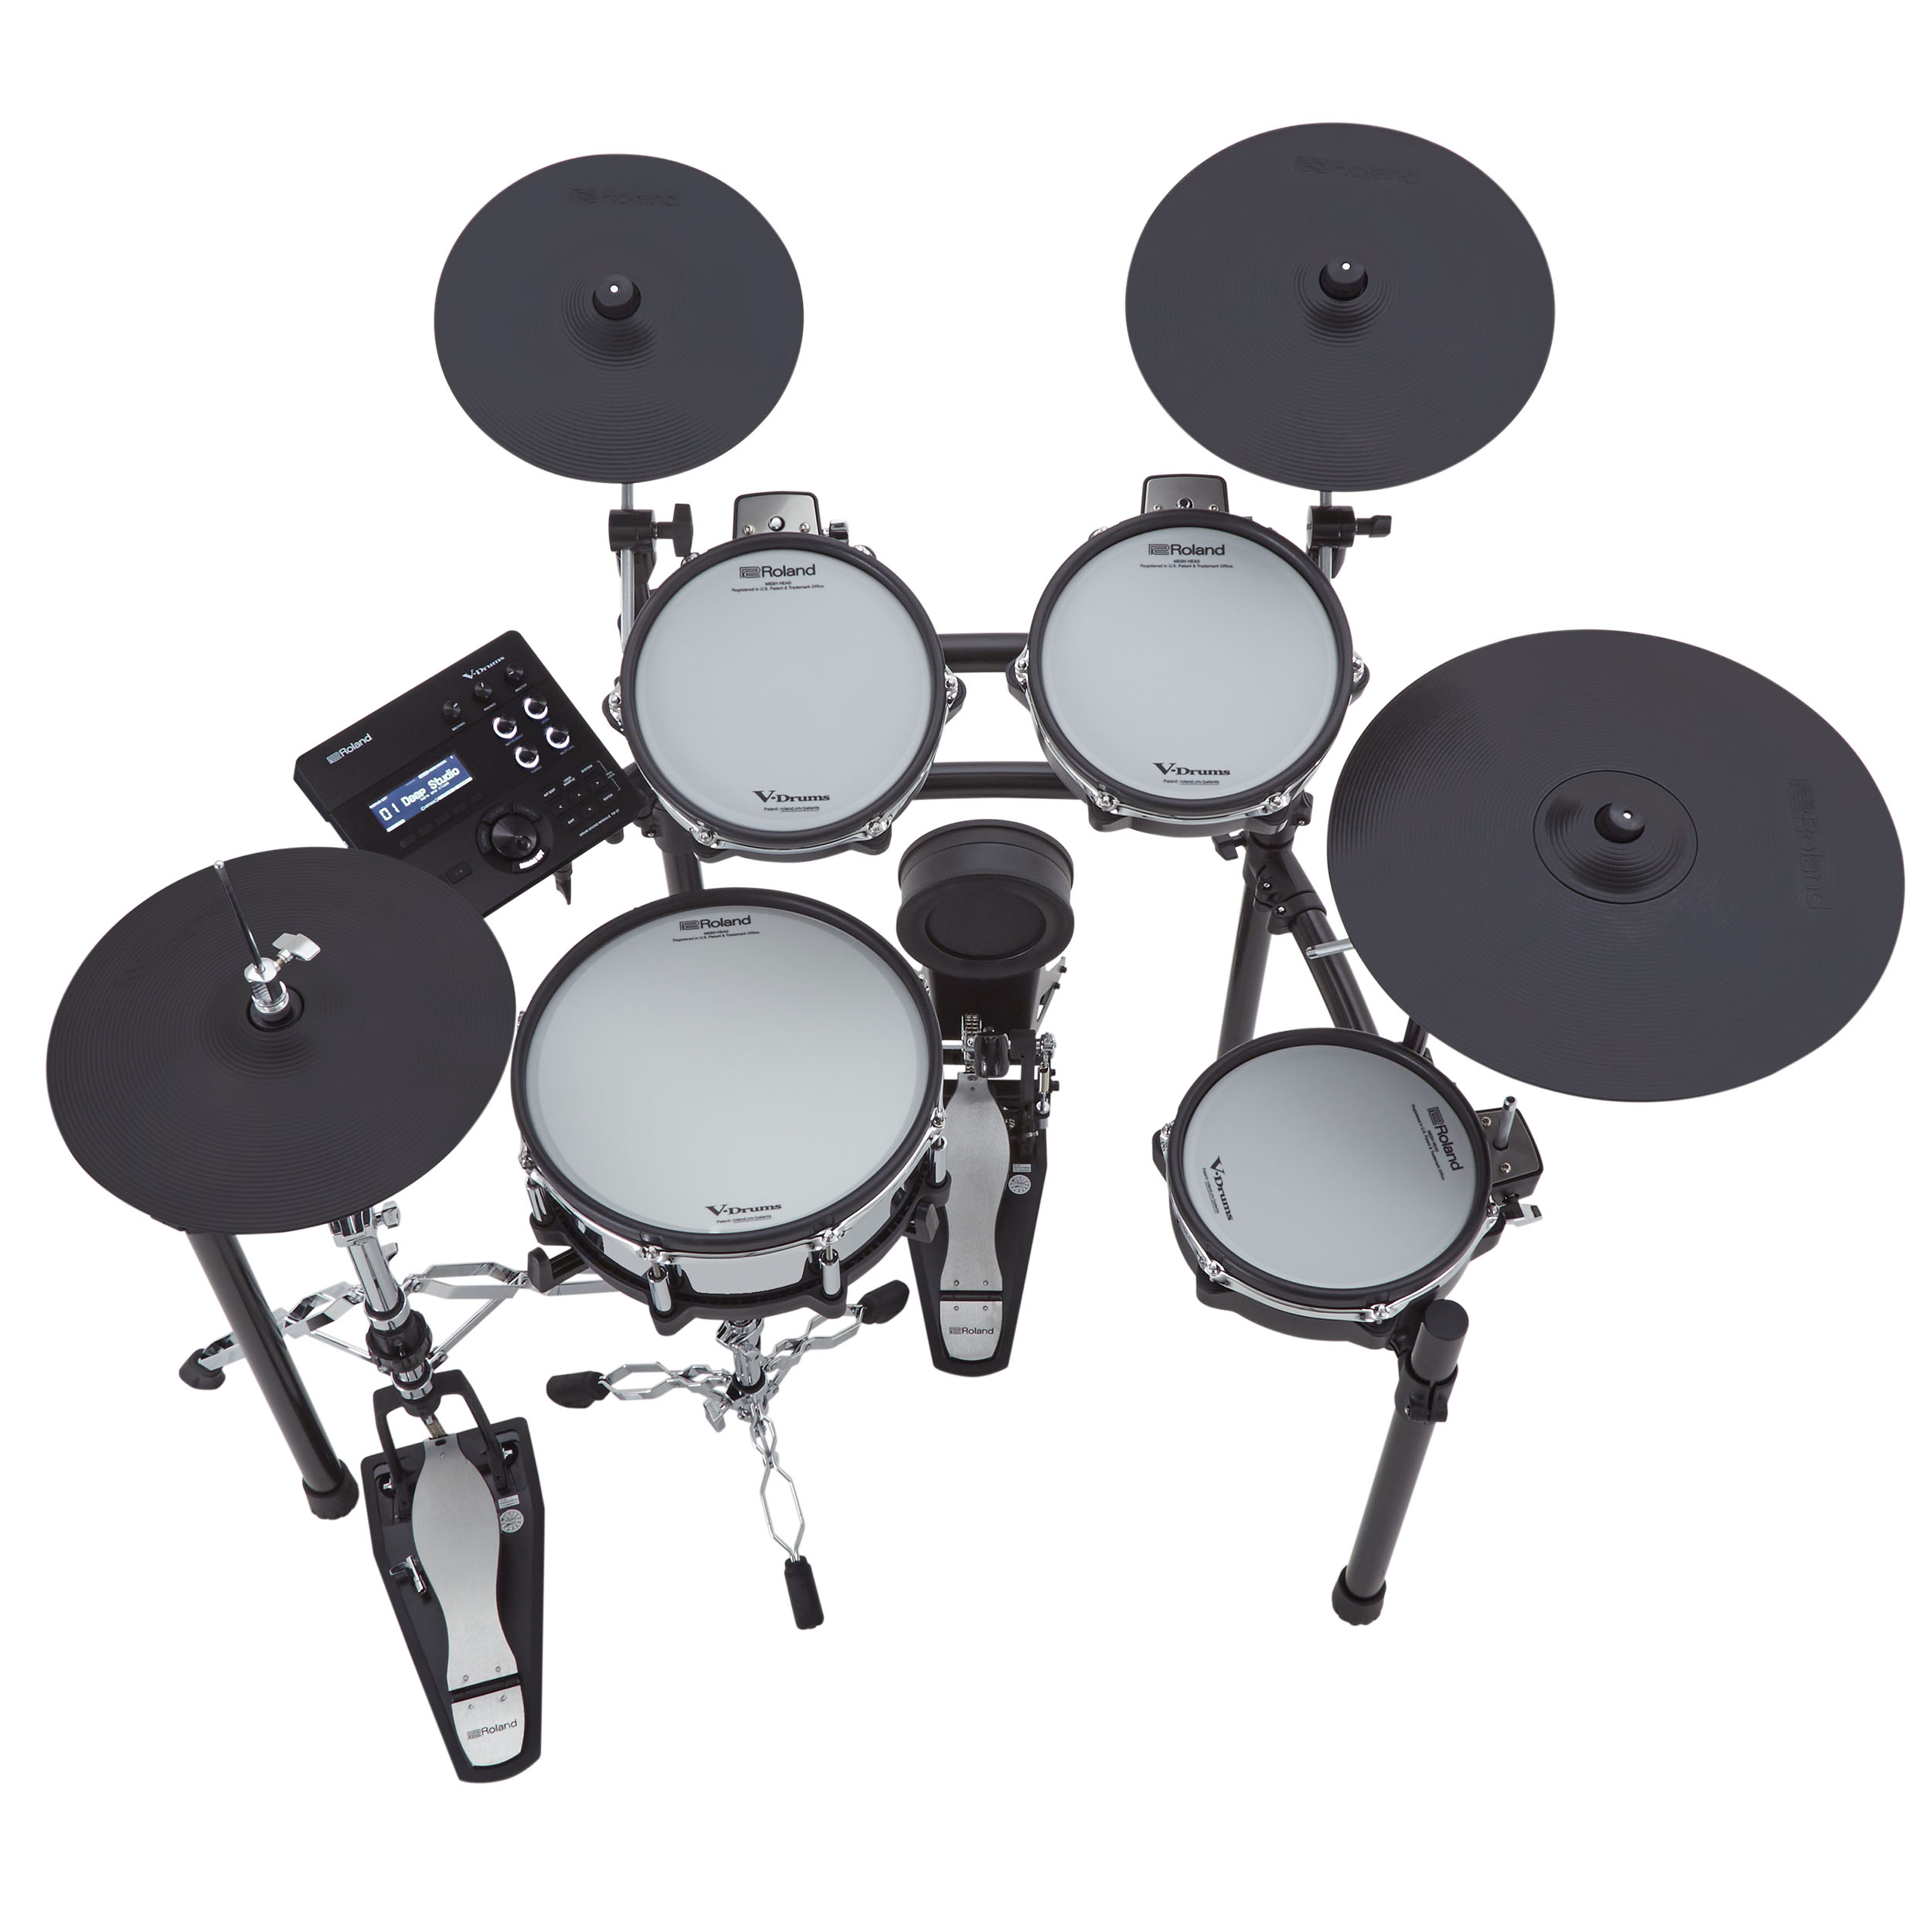 Roland Td-27kv2 - Komplett E-Drum Set - Variation 3